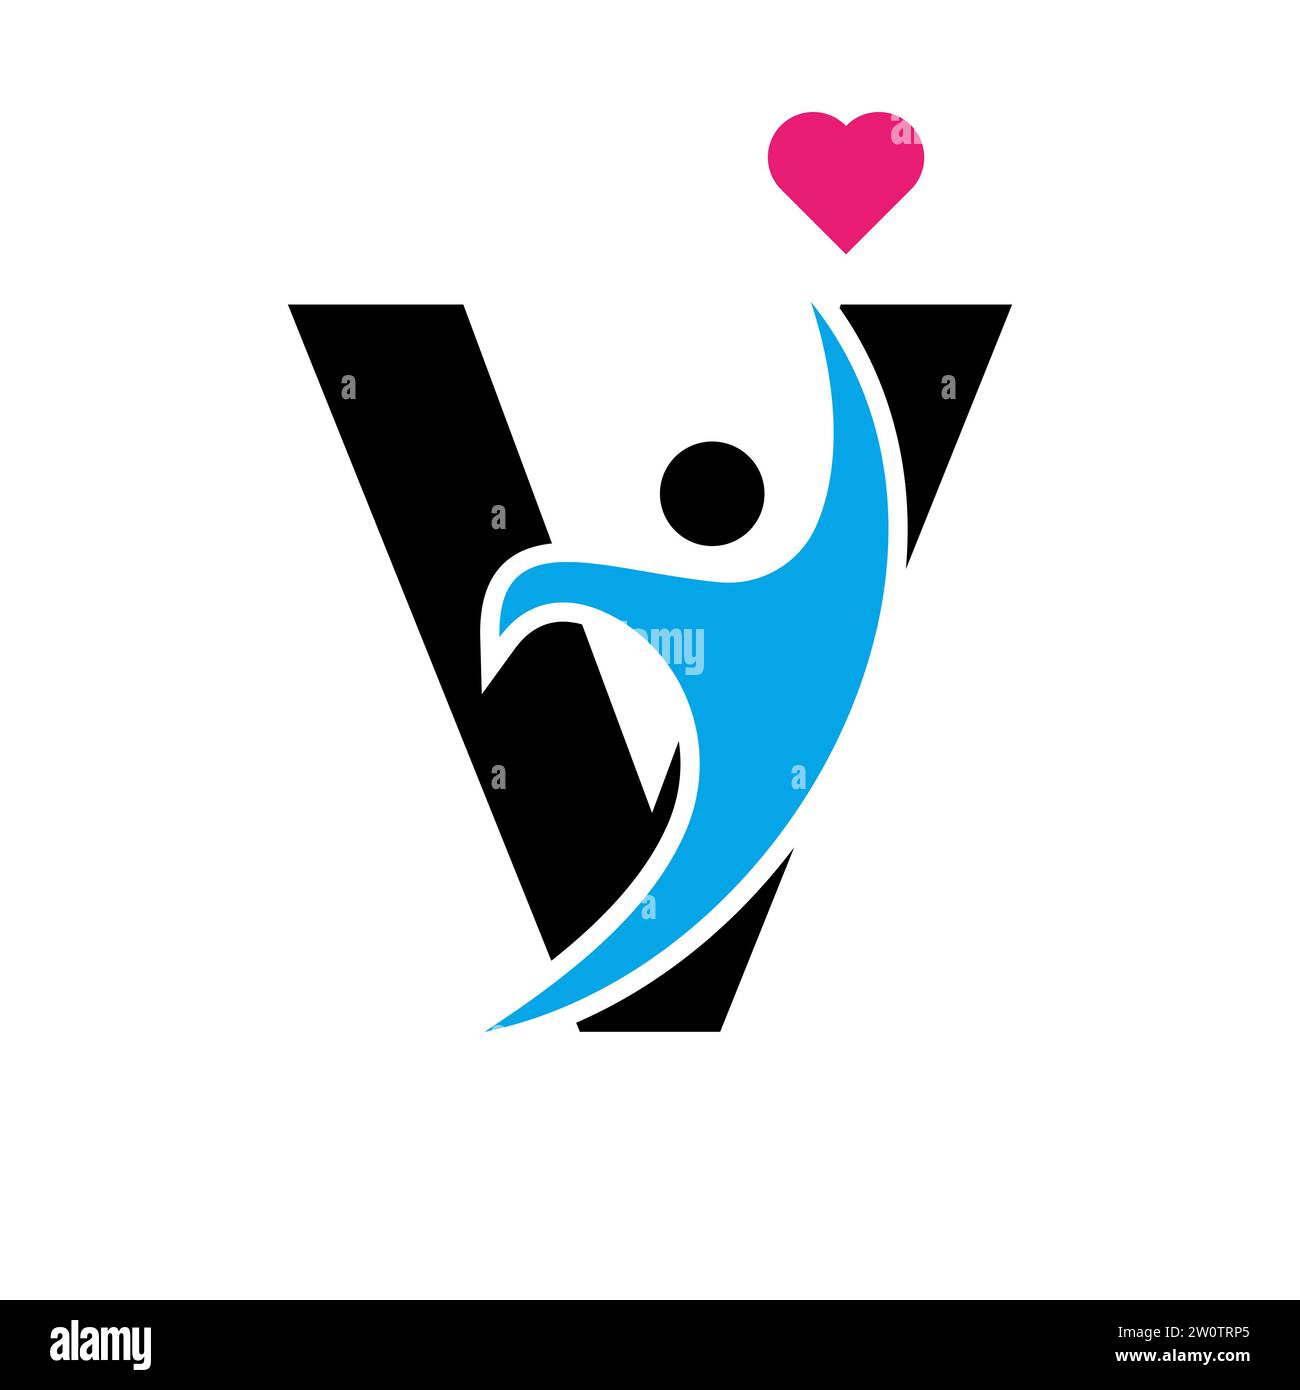 V v heart logo Stock Vector Images - Page 2 - Alamy